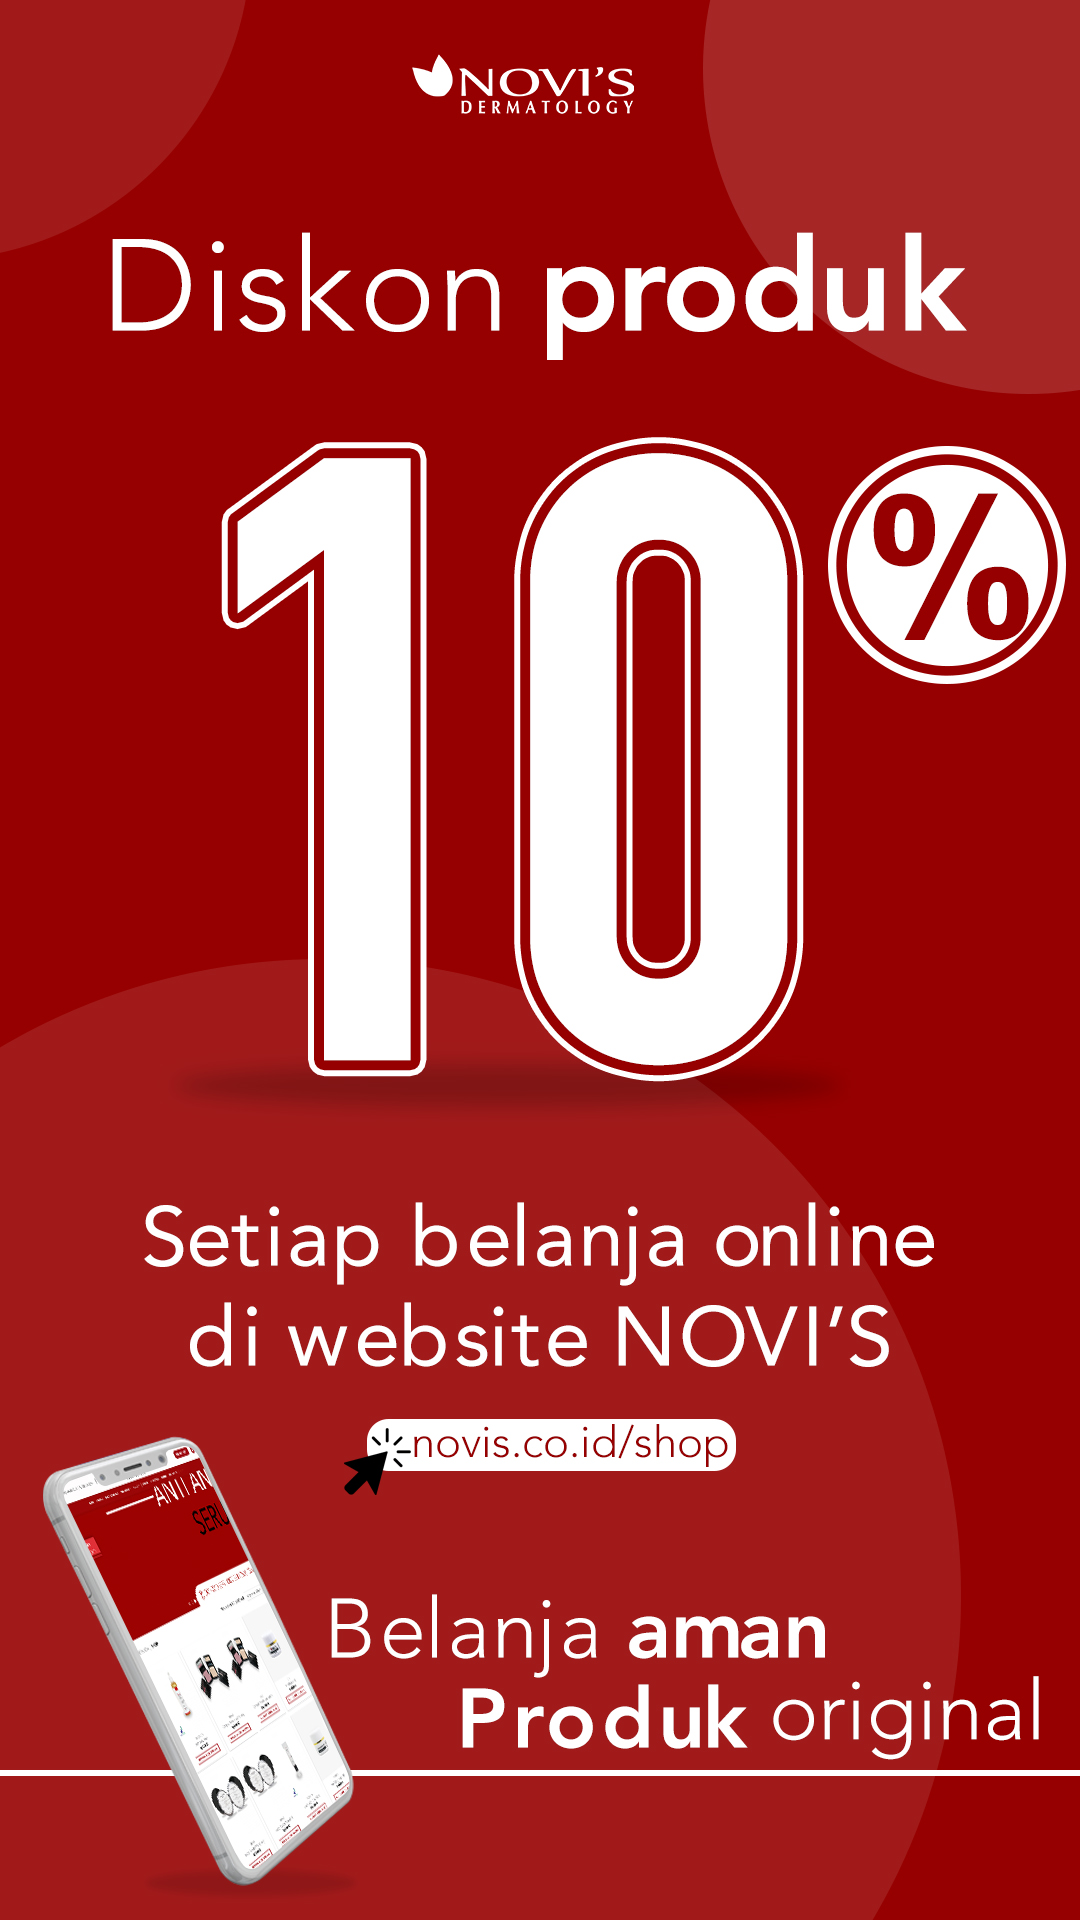 Diskon produk novis 10% pembelian melalui website selama bulan mei 2020